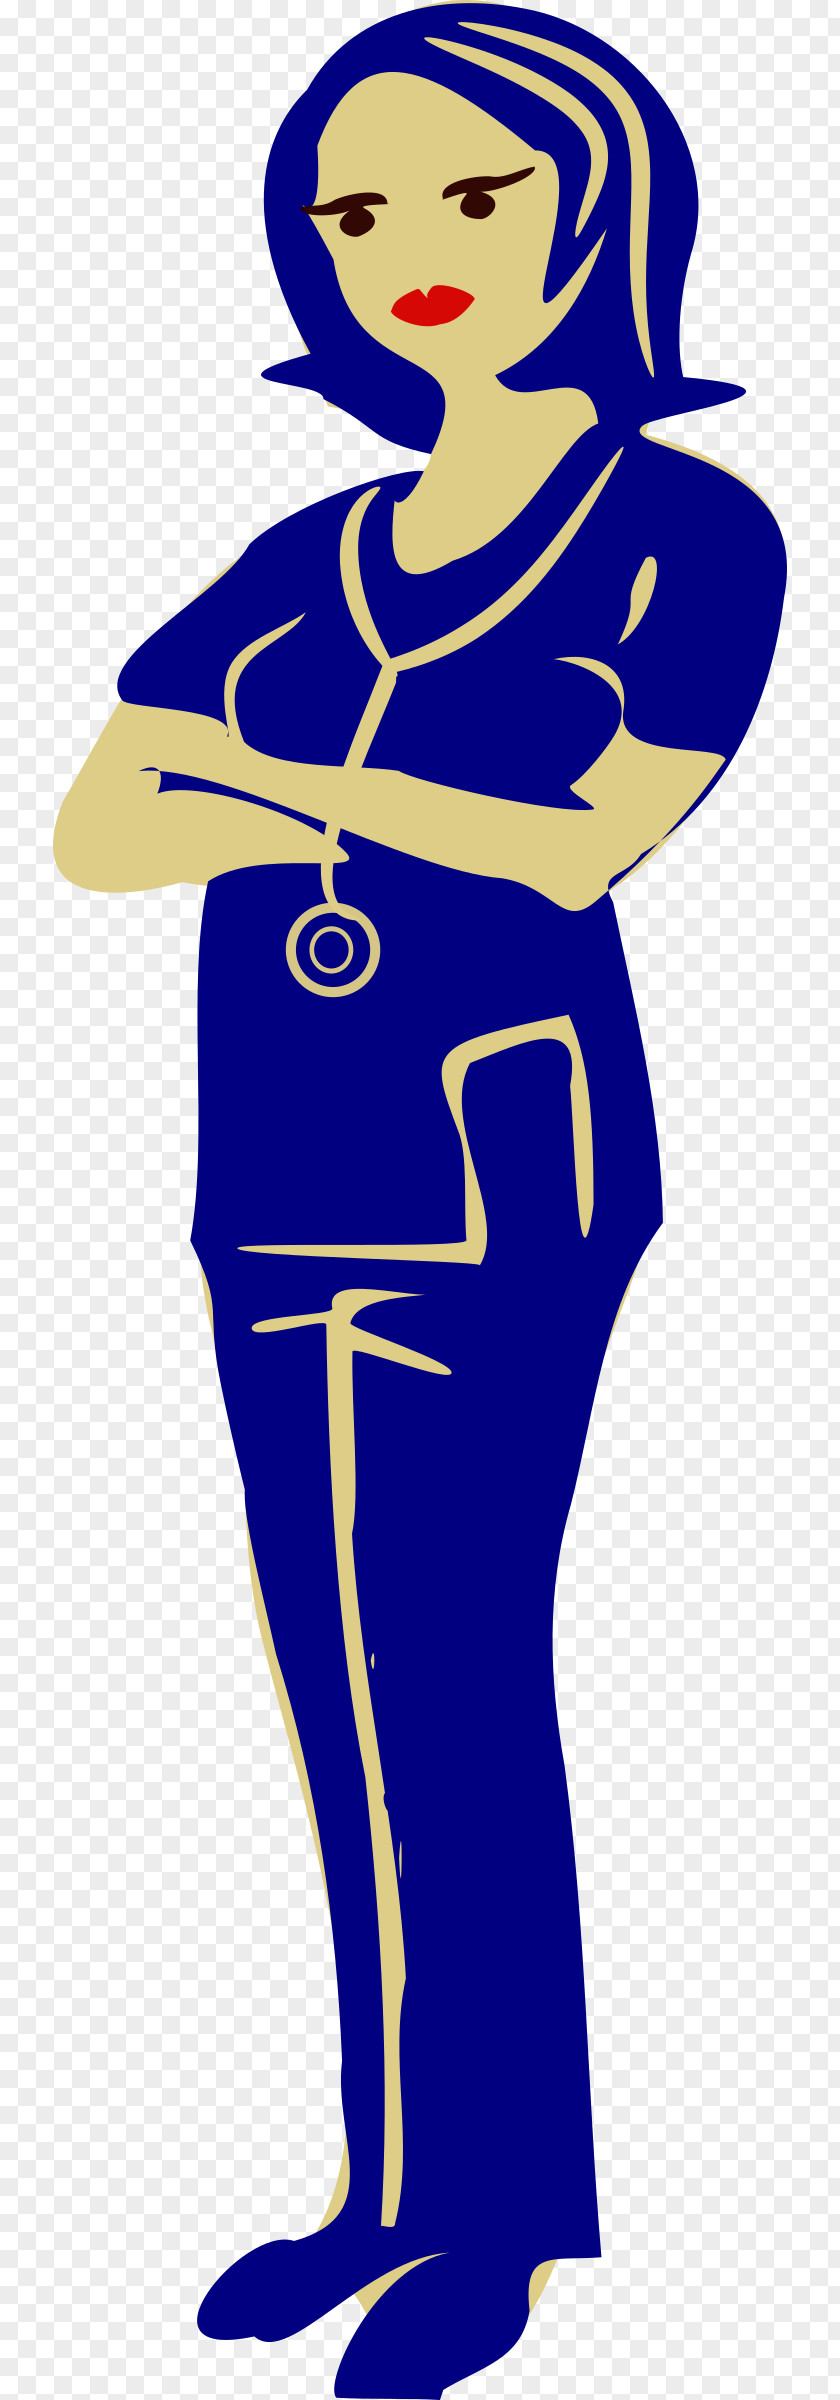 Blue Stethoscope Emergency Nursing Department Nurse Clip Art PNG